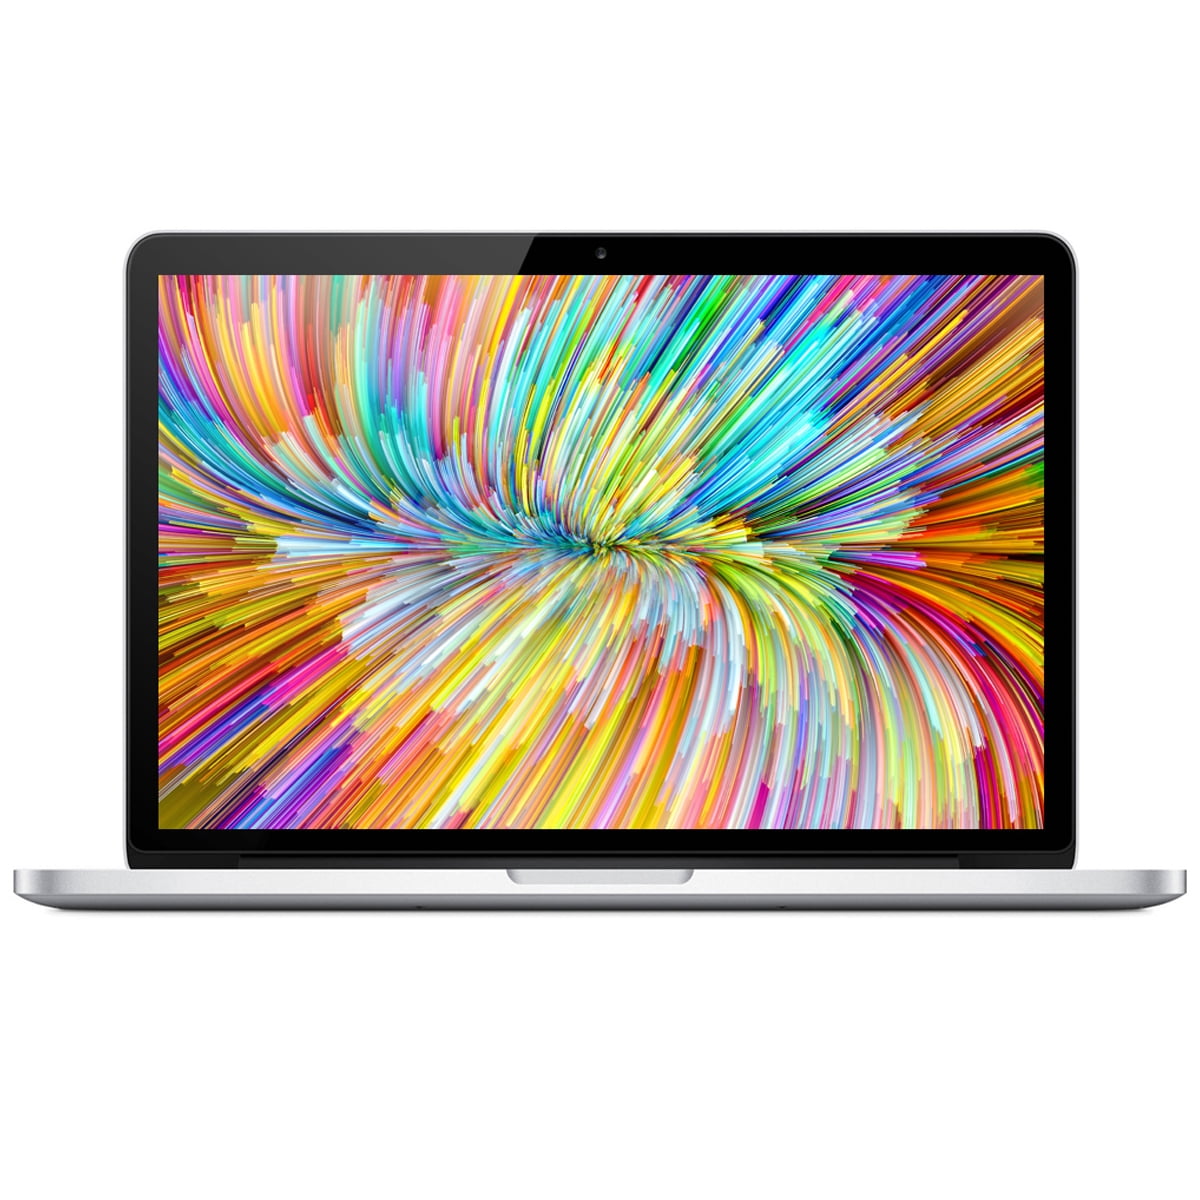 Refurbished 2020 Apple MacBook Air (13 Inch, Gold, 1.1GHz i3, 8GB 